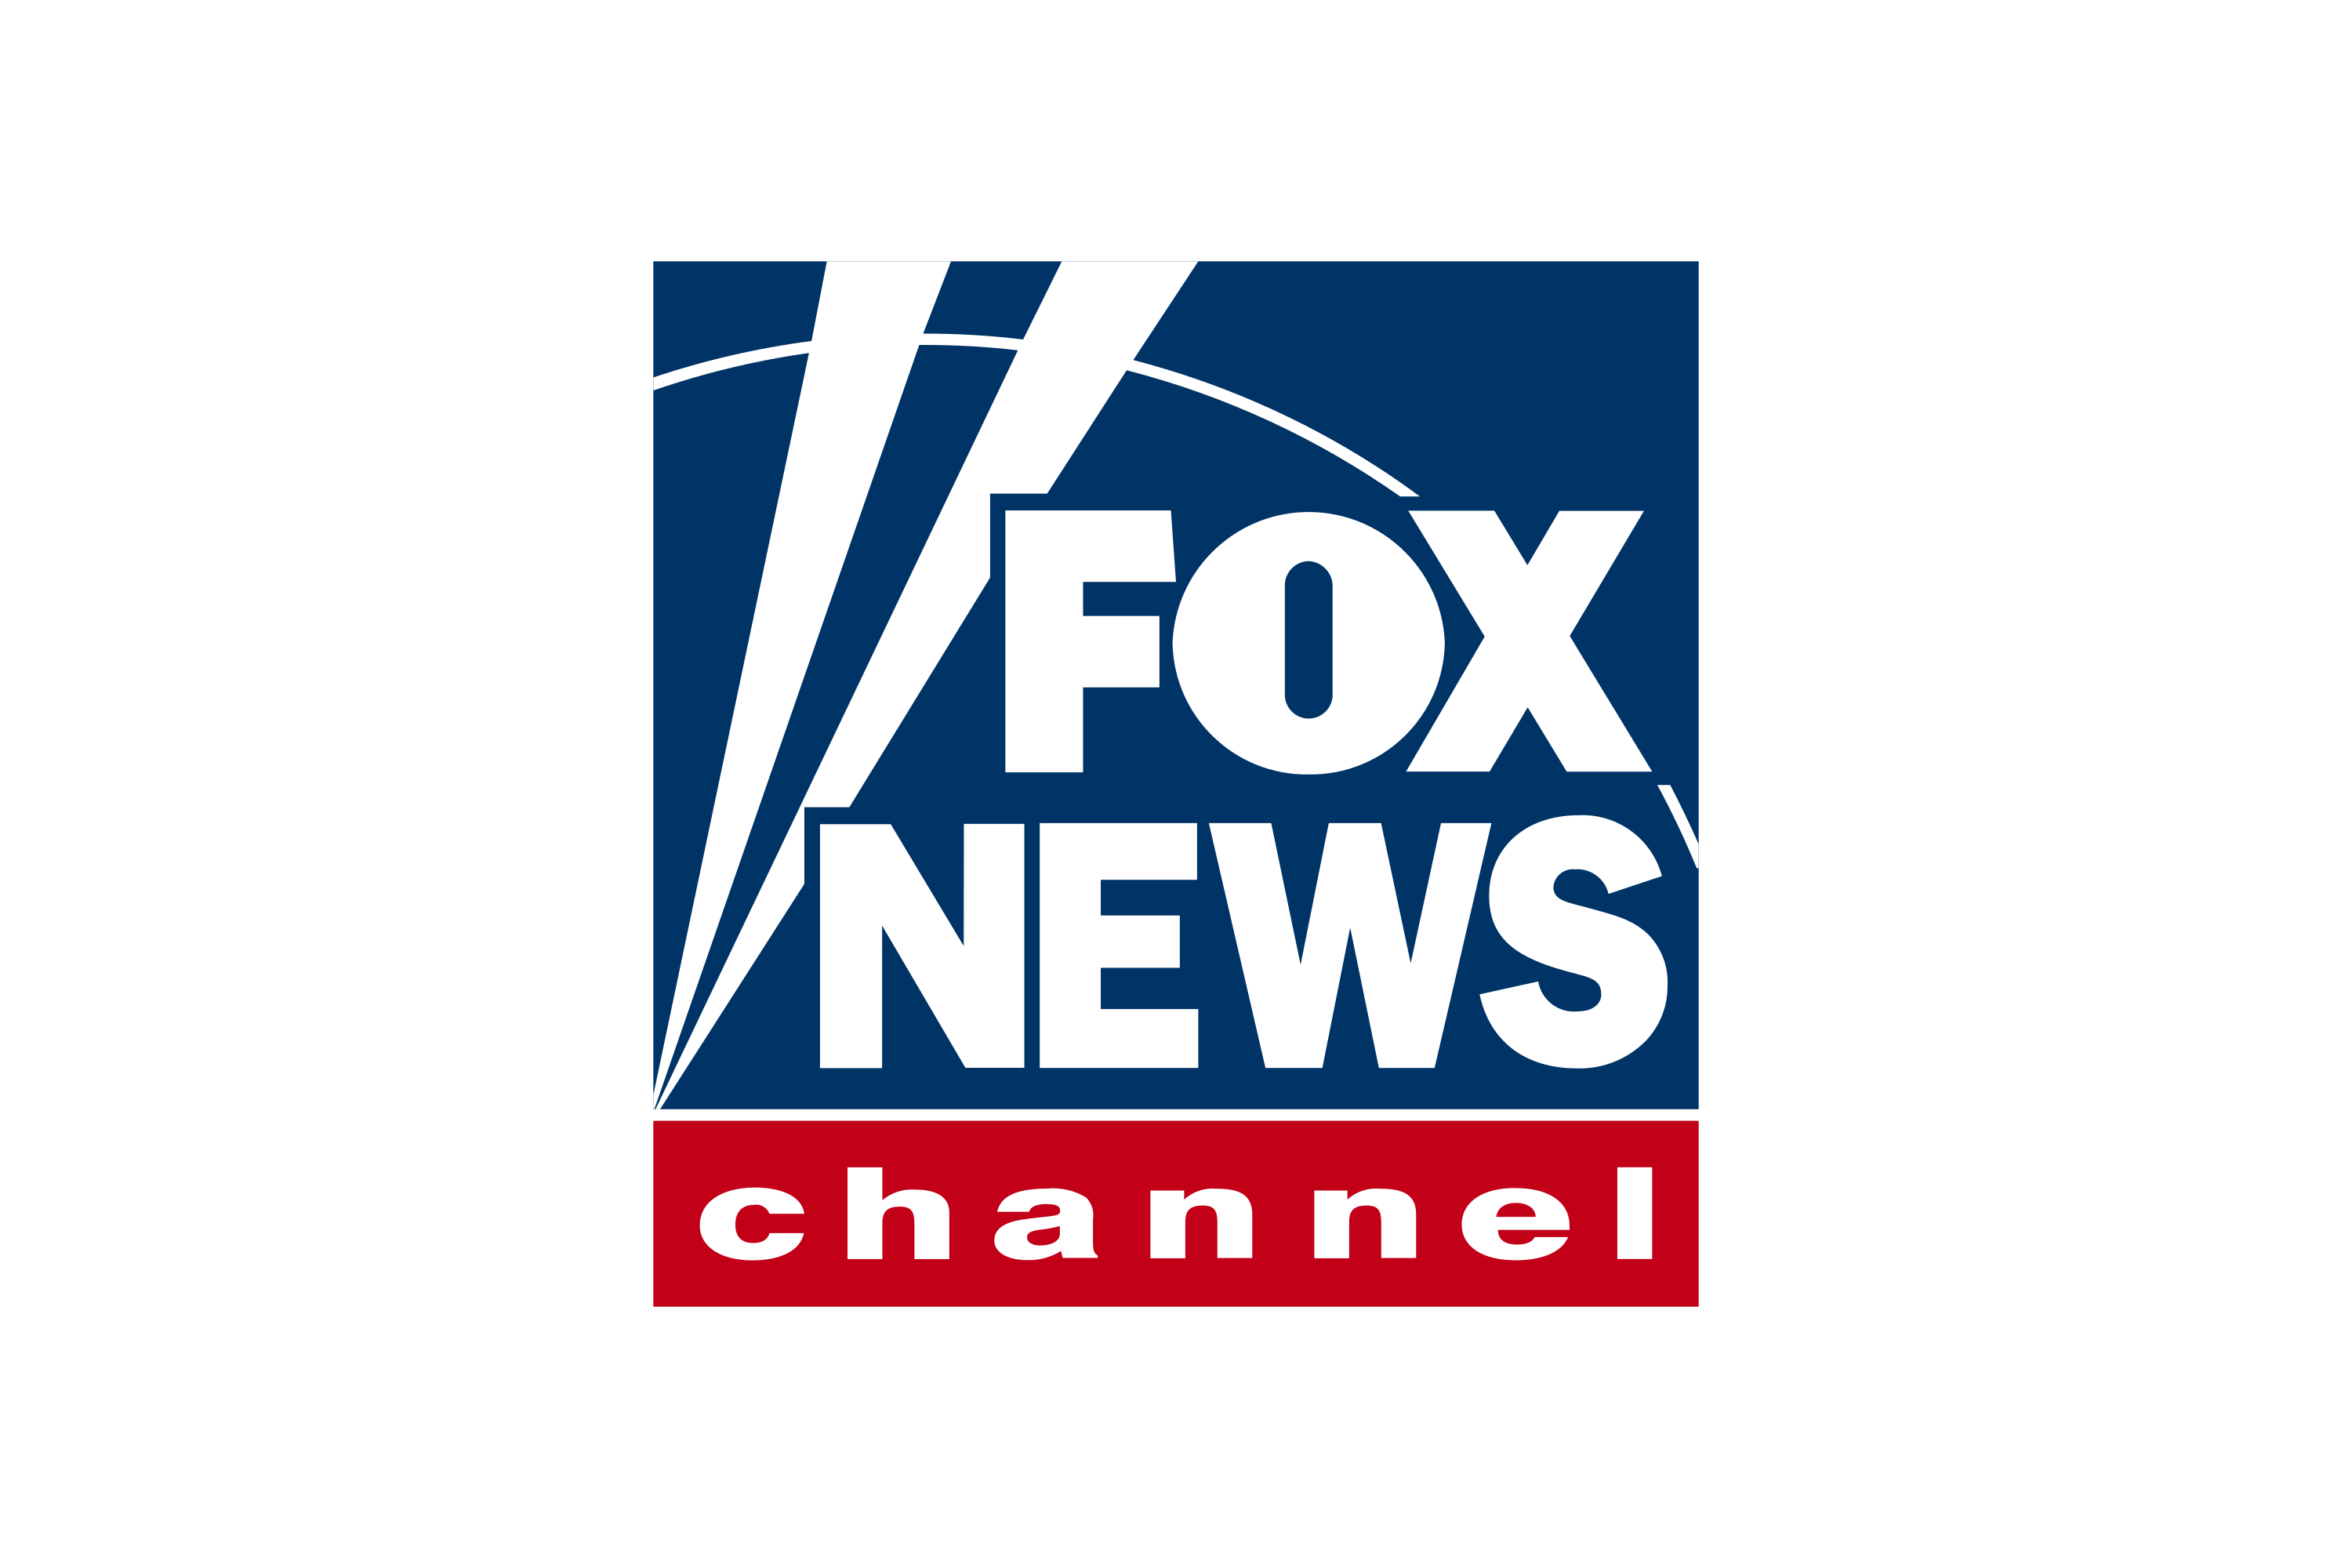 Download Fox News (FNC) Logo in SVG Vector or PNG File Format - Logo.wine